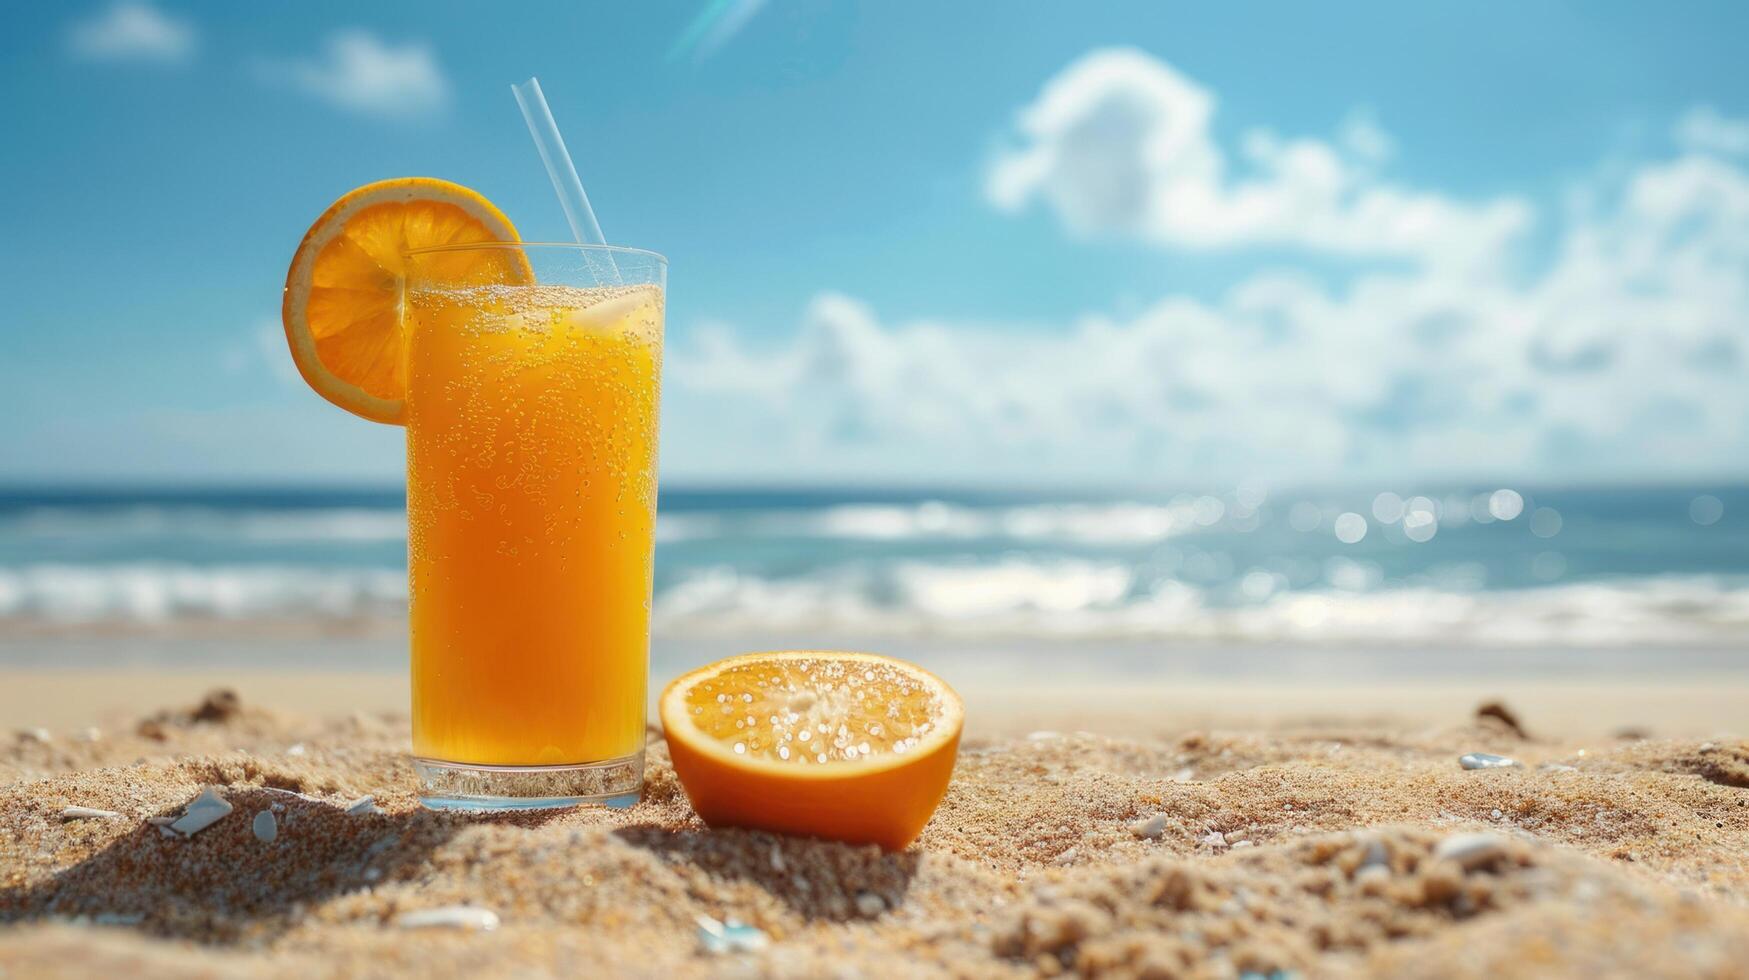 AI generated Fresh orange juice, fruits on sand with blue sky background, summer concept photo